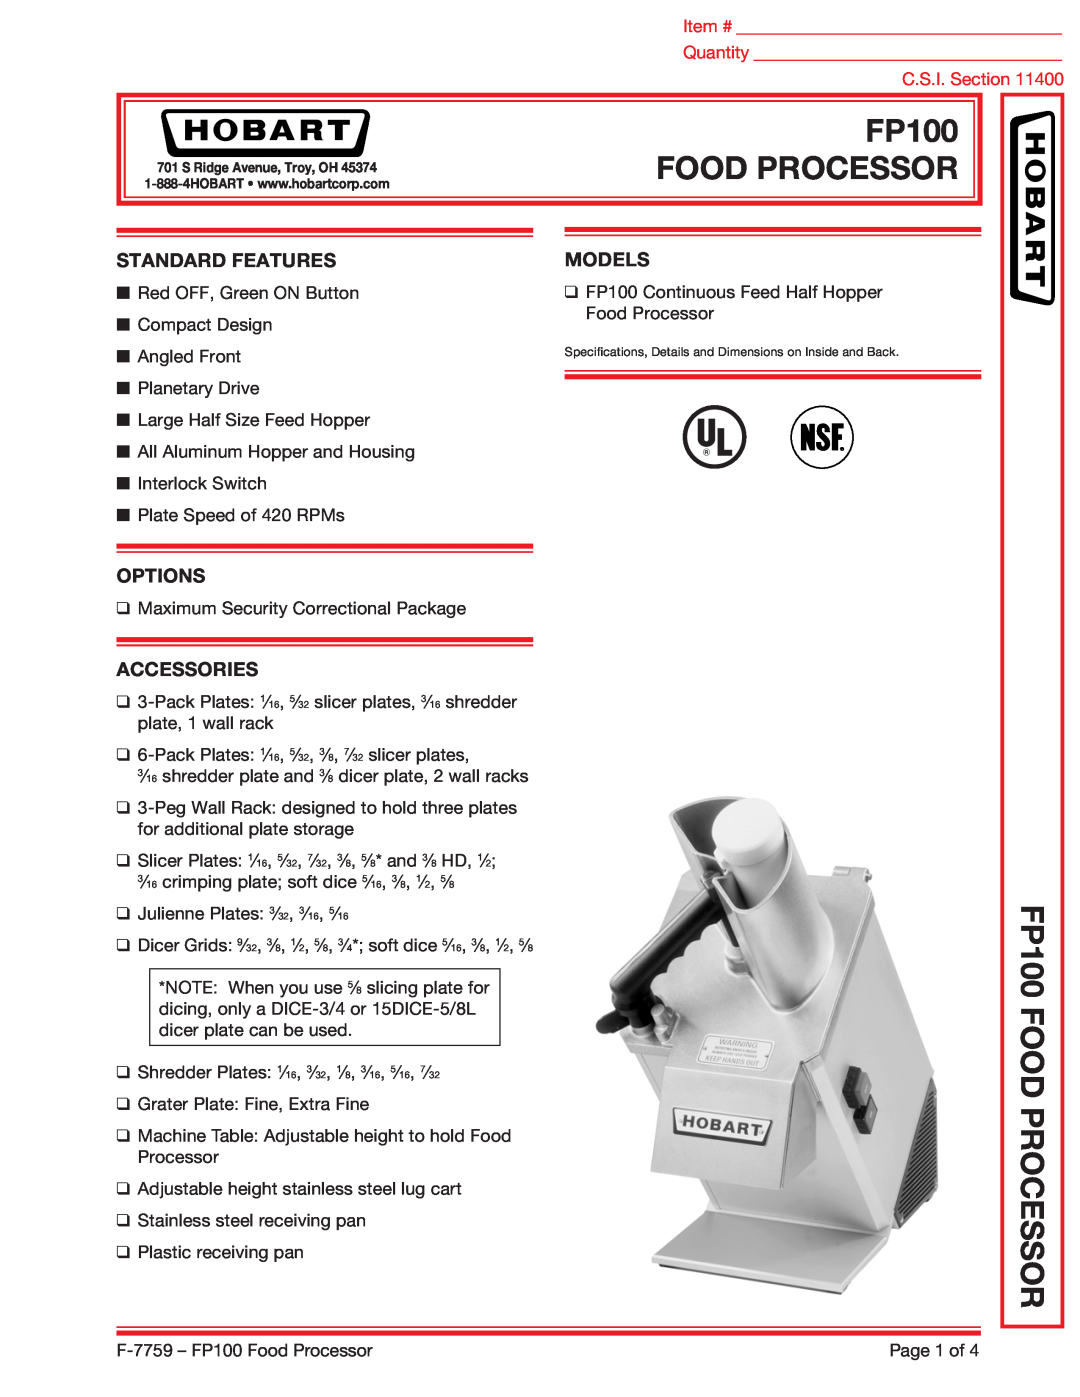 Hobart dimensions Food Processor, FP100 FOOD PROCESSOR, Standard Features, Models, Options, Accessories, C.S.I. Section 